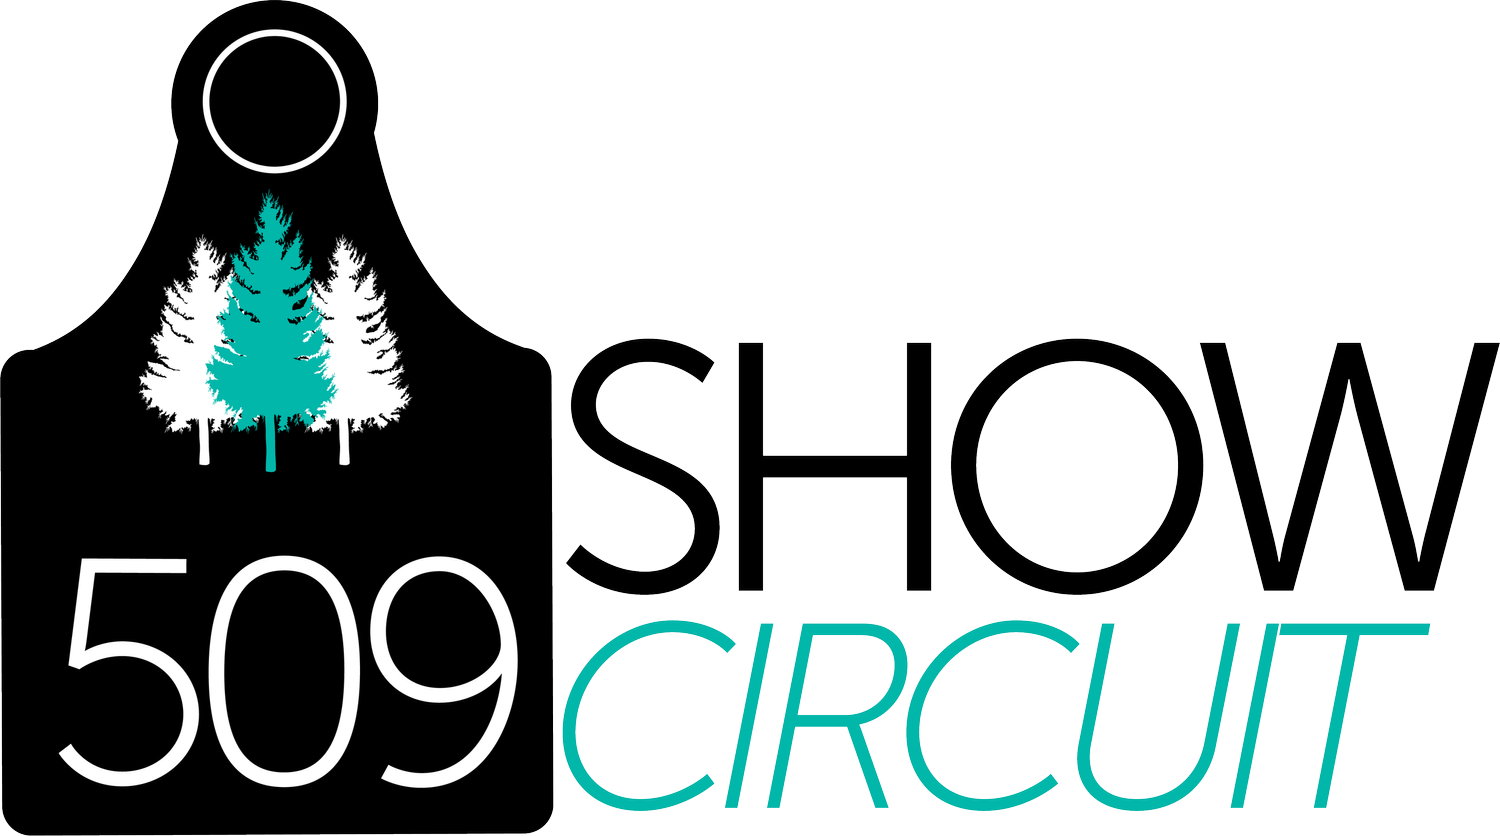 509 Show Circuit